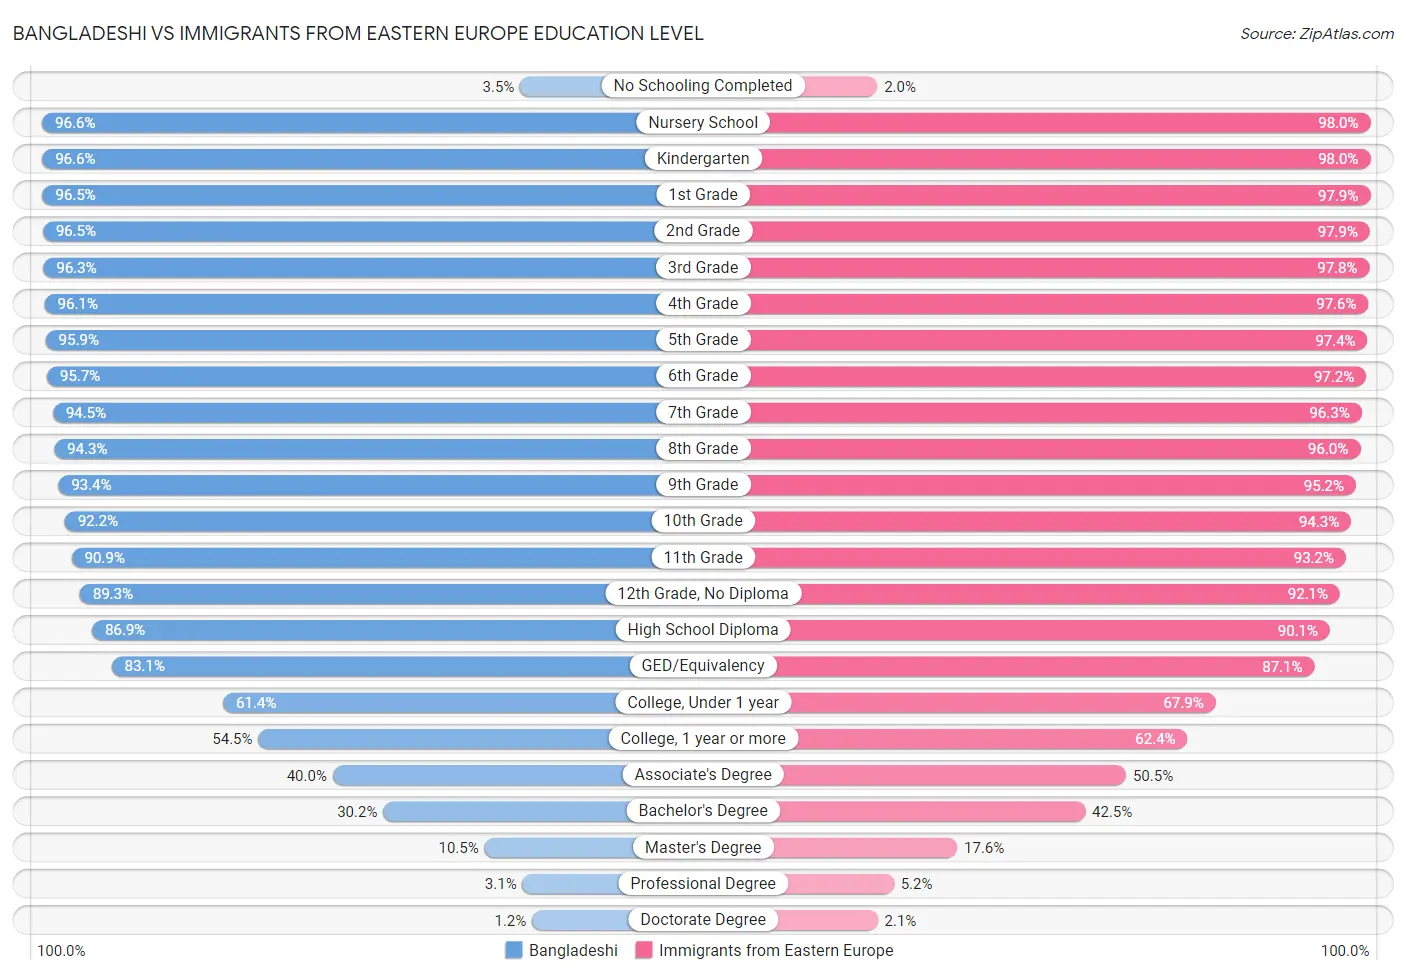 Bangladeshi vs Immigrants from Eastern Europe Education Level